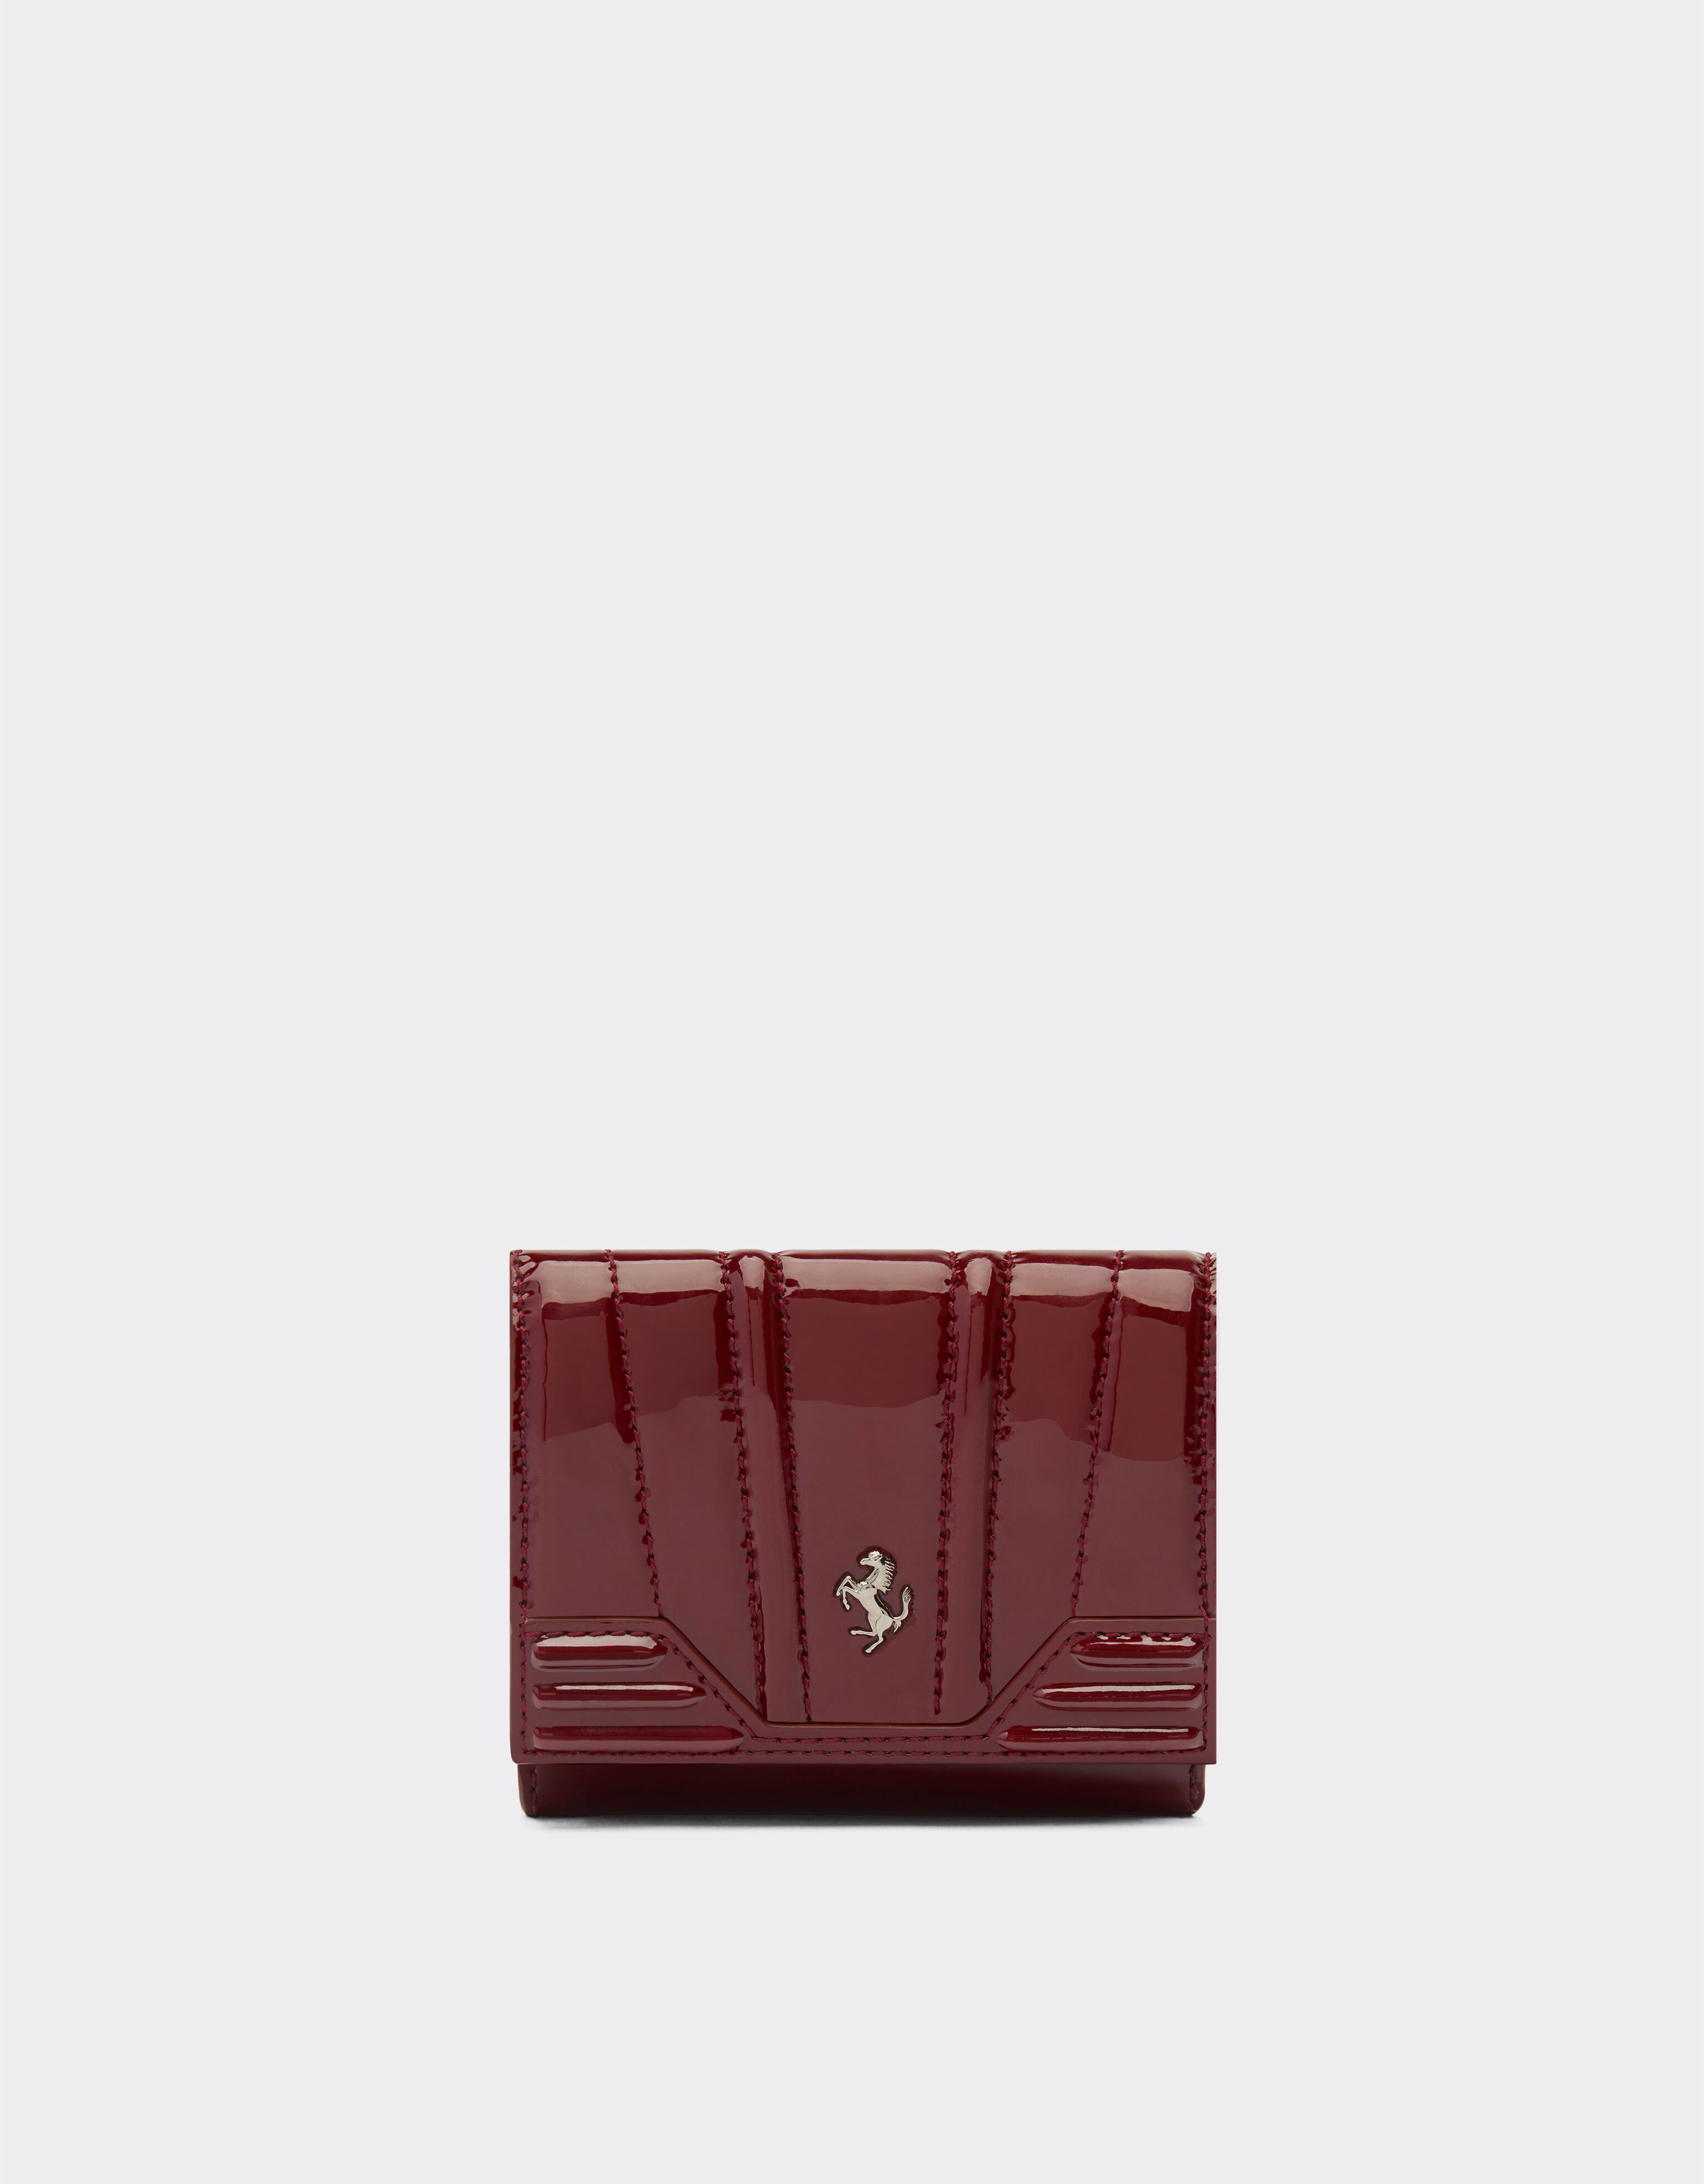 Ferrari Portemonnaie aus glänzendem Lackleder, dreifach faltbar Bordeaux 20426f